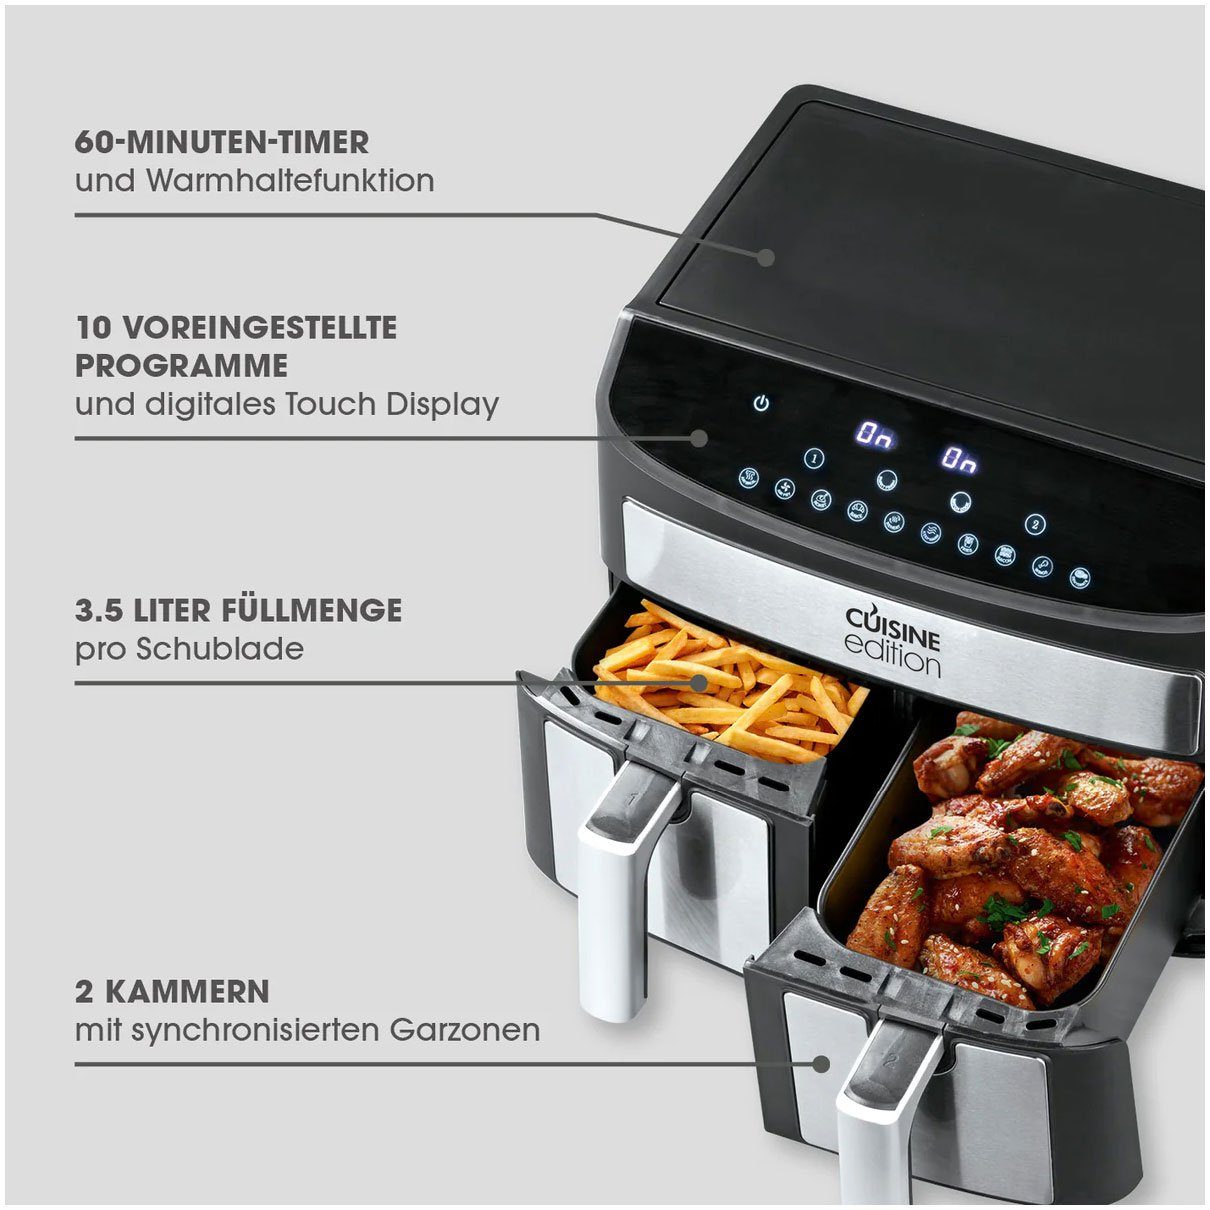 Cuisine getrennt regelbar, 40-230°C Edition 12617, 2x Timer, Heißluftfritteuse W, 3,5 Liter LED-Touch-Display, 2400